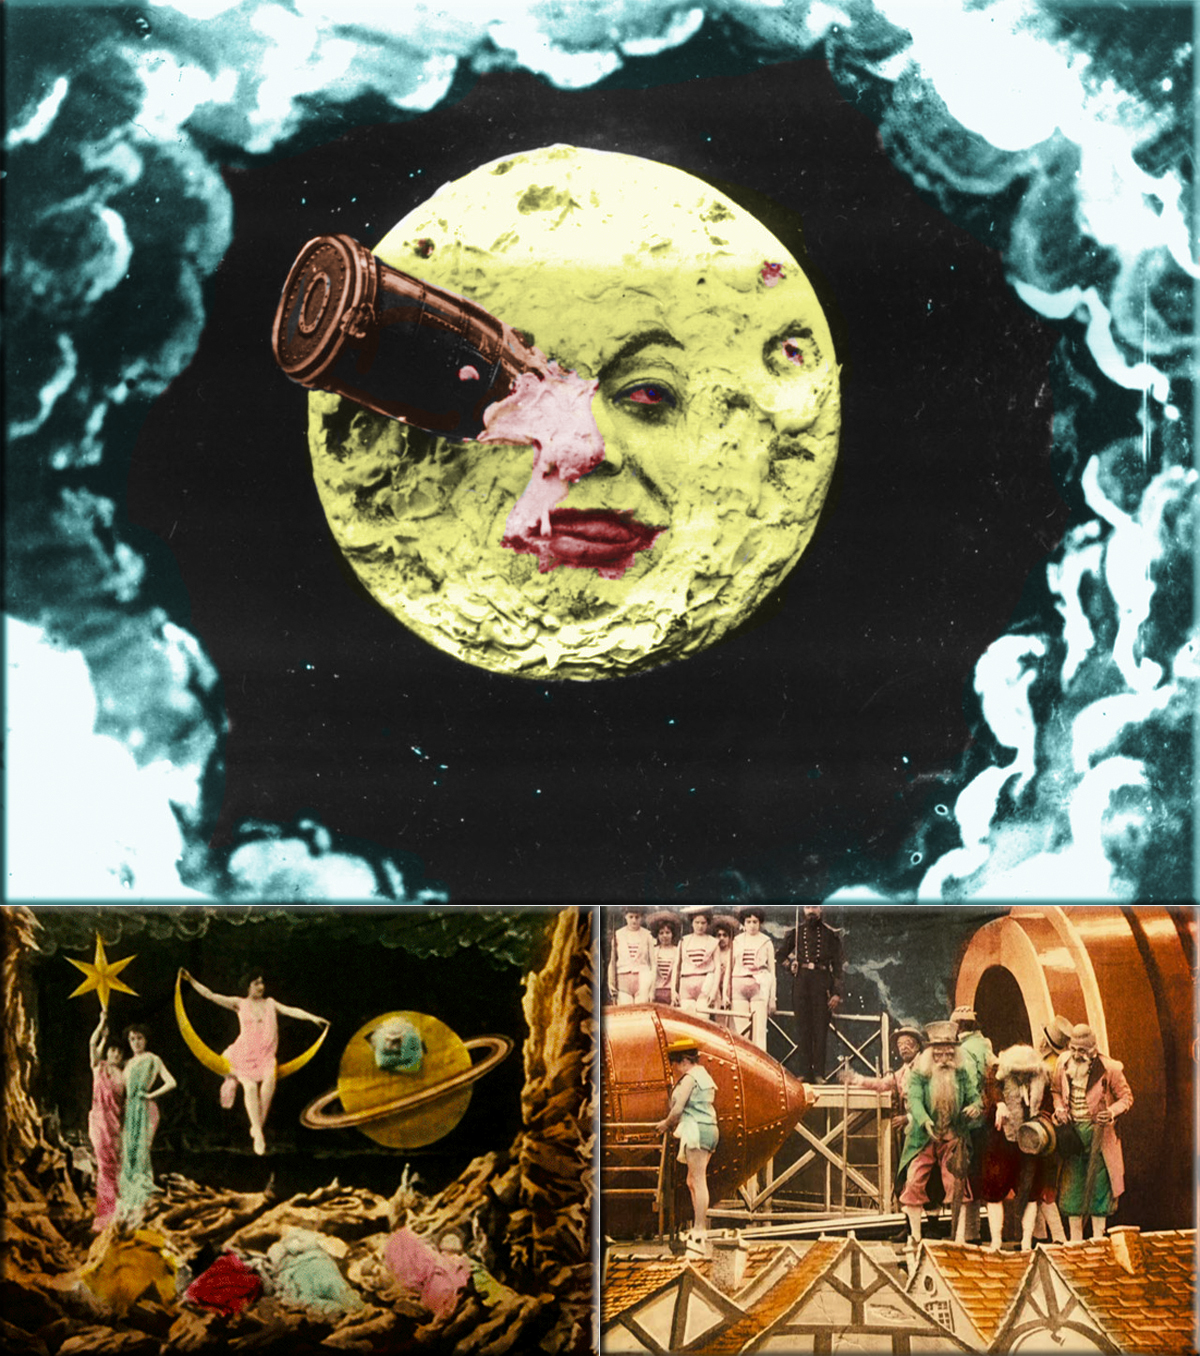 A shot from Georges Méliès Le Voyage dans la Lune (A Trip to the Moon) (1902), an early narrative film